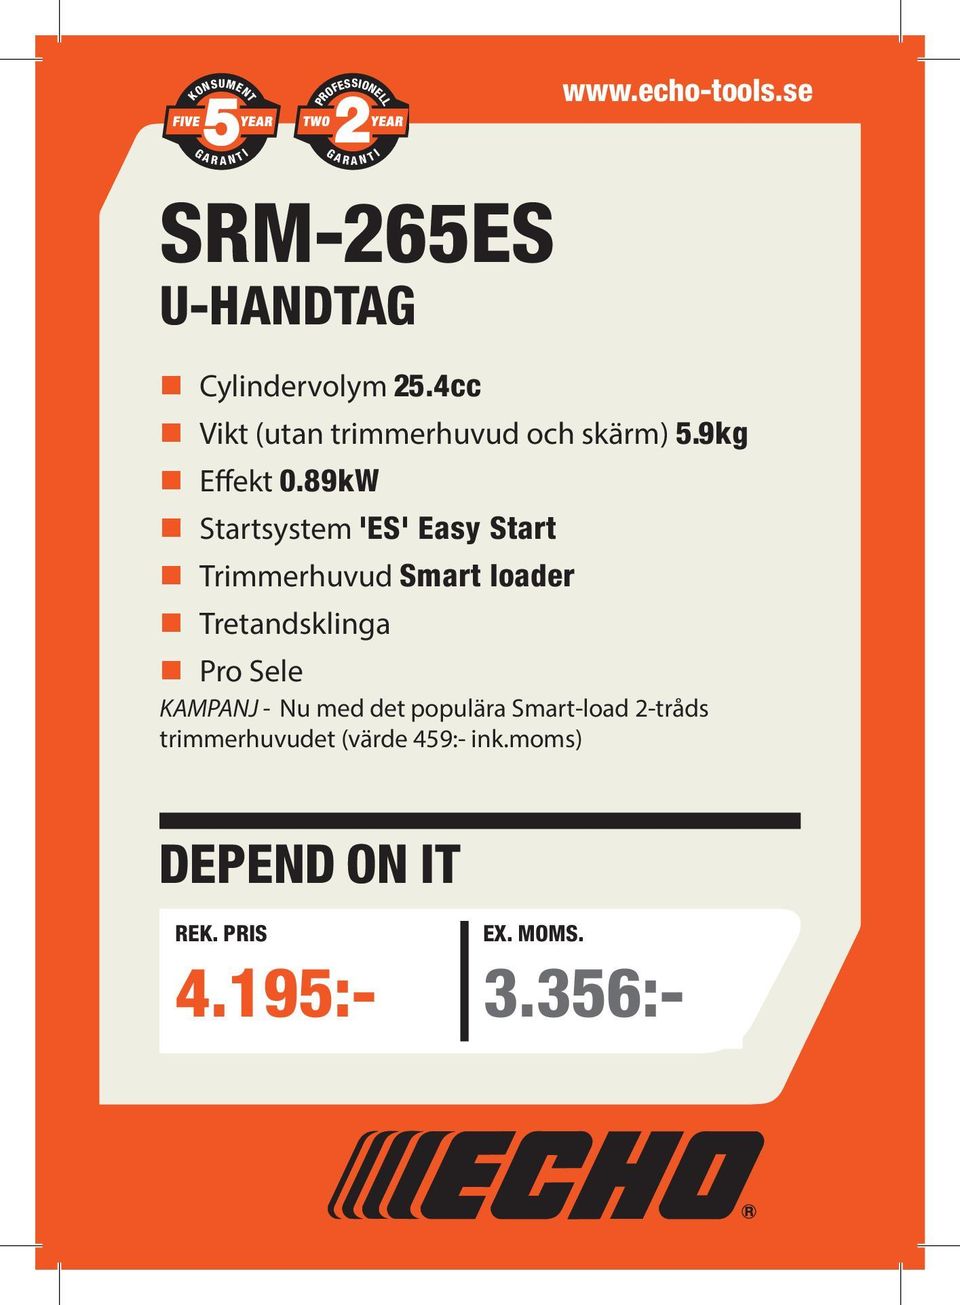 71kW 'ES' Easy Start Length rimmerhuvud w/o cutting Smart head loader 1460mm Fuel retandsklinga tank capacity 0.